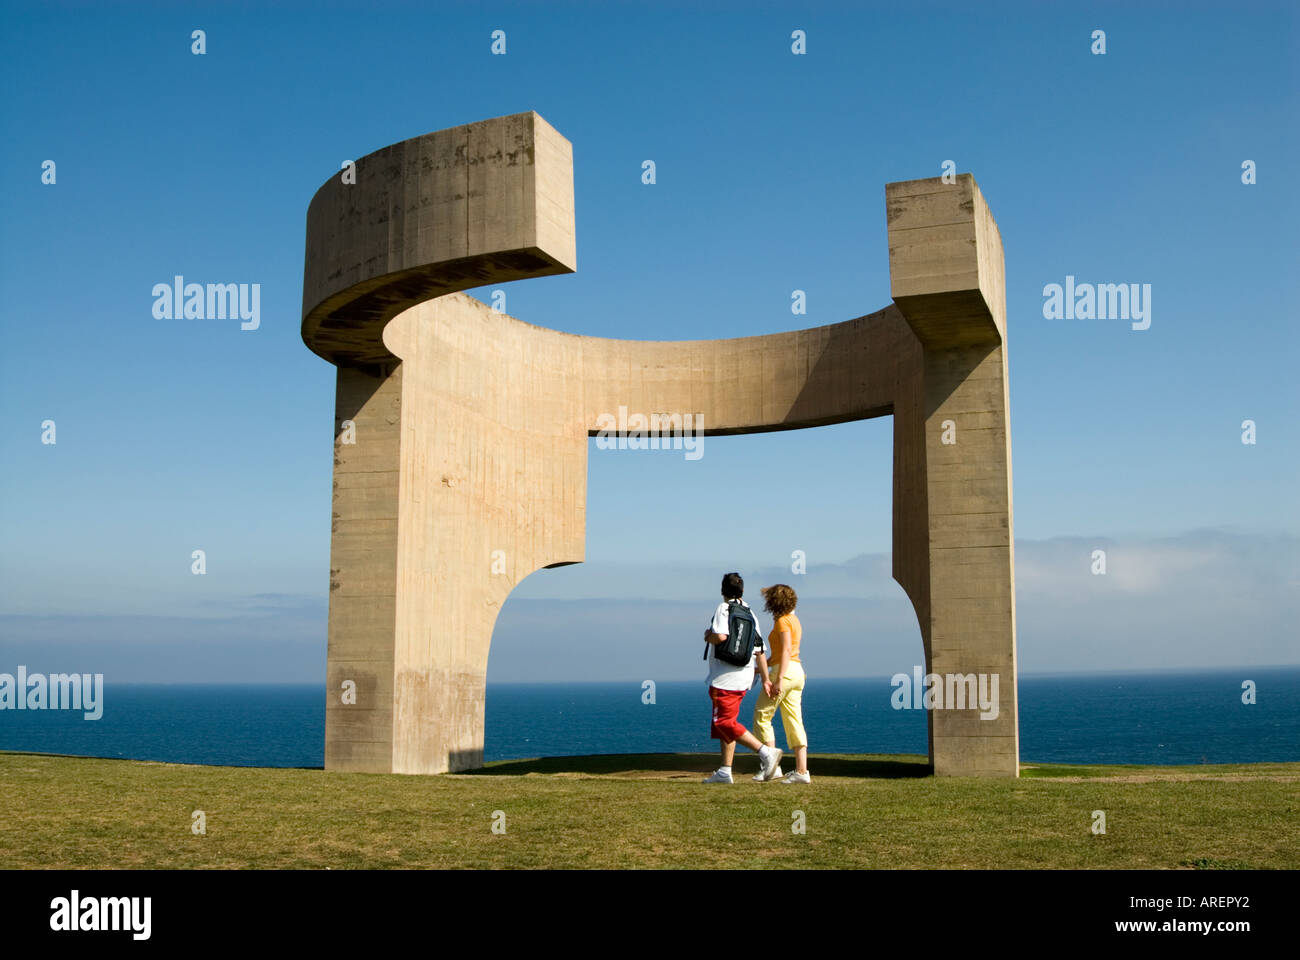 Modern sculpture Elogio del Horizonte by Eduardo Chillida on Cerro de Santa Catalina, Gijon, Asturias, Spain Stock Photo